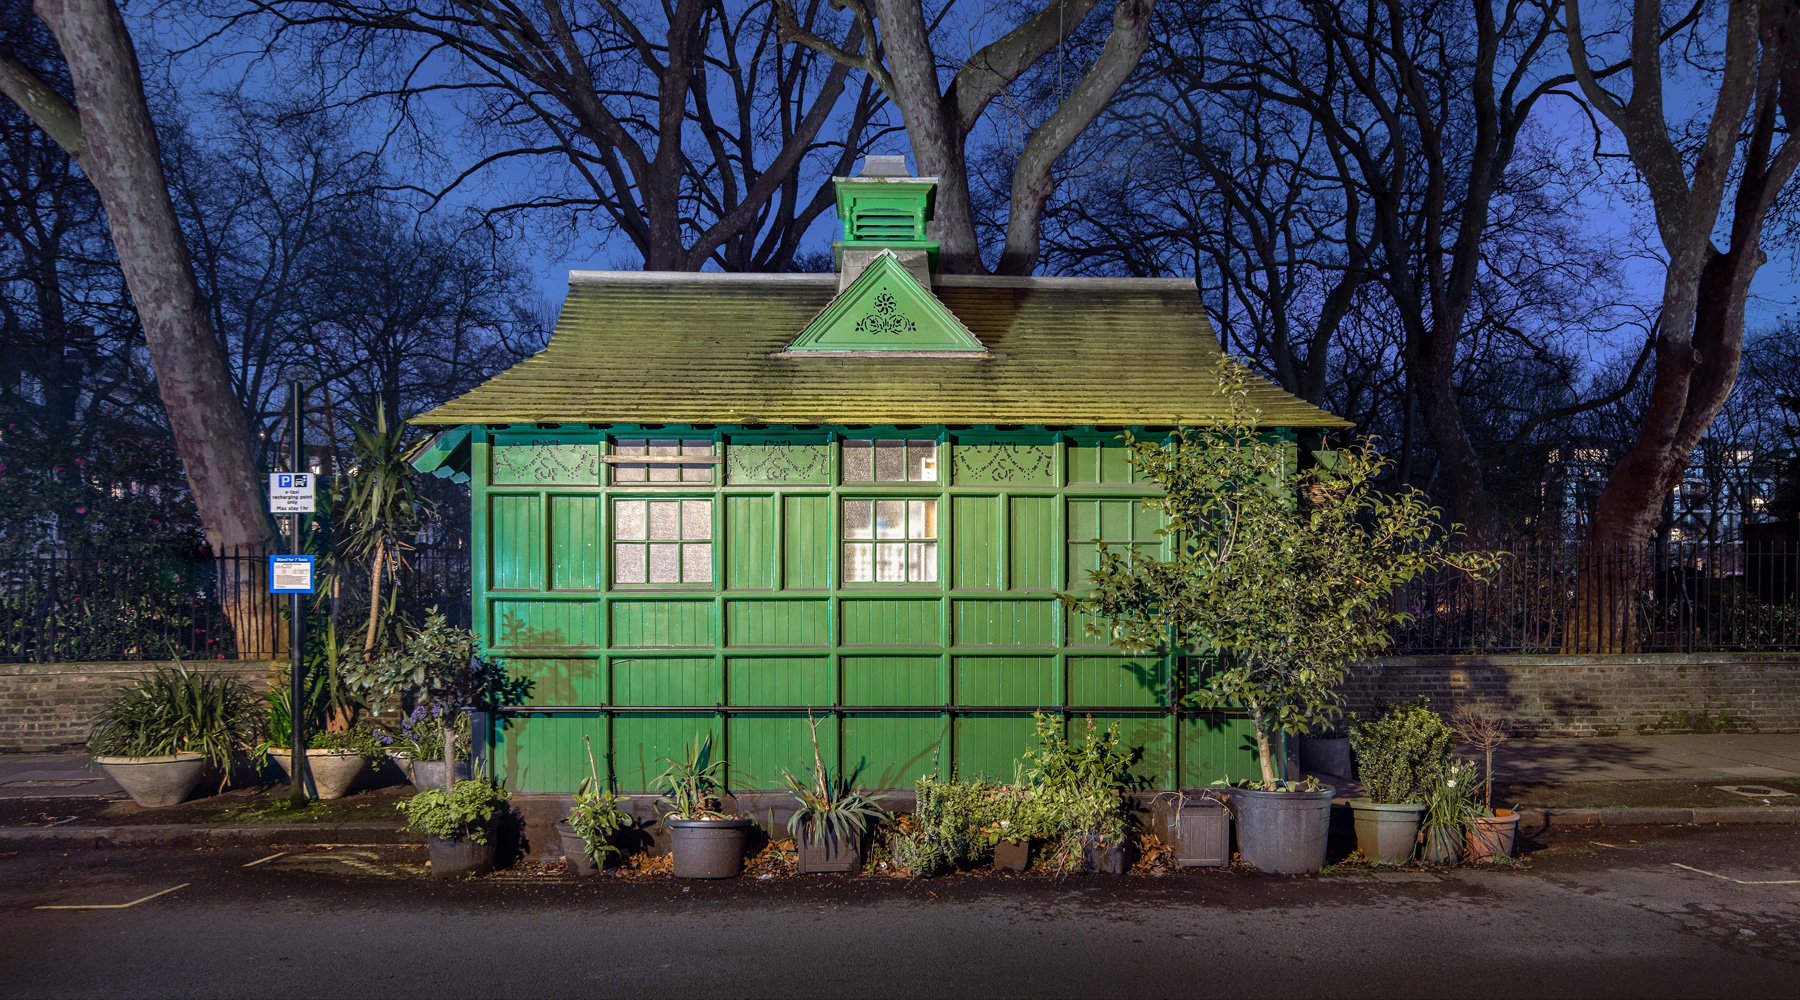 Green London Cabman's Shelter